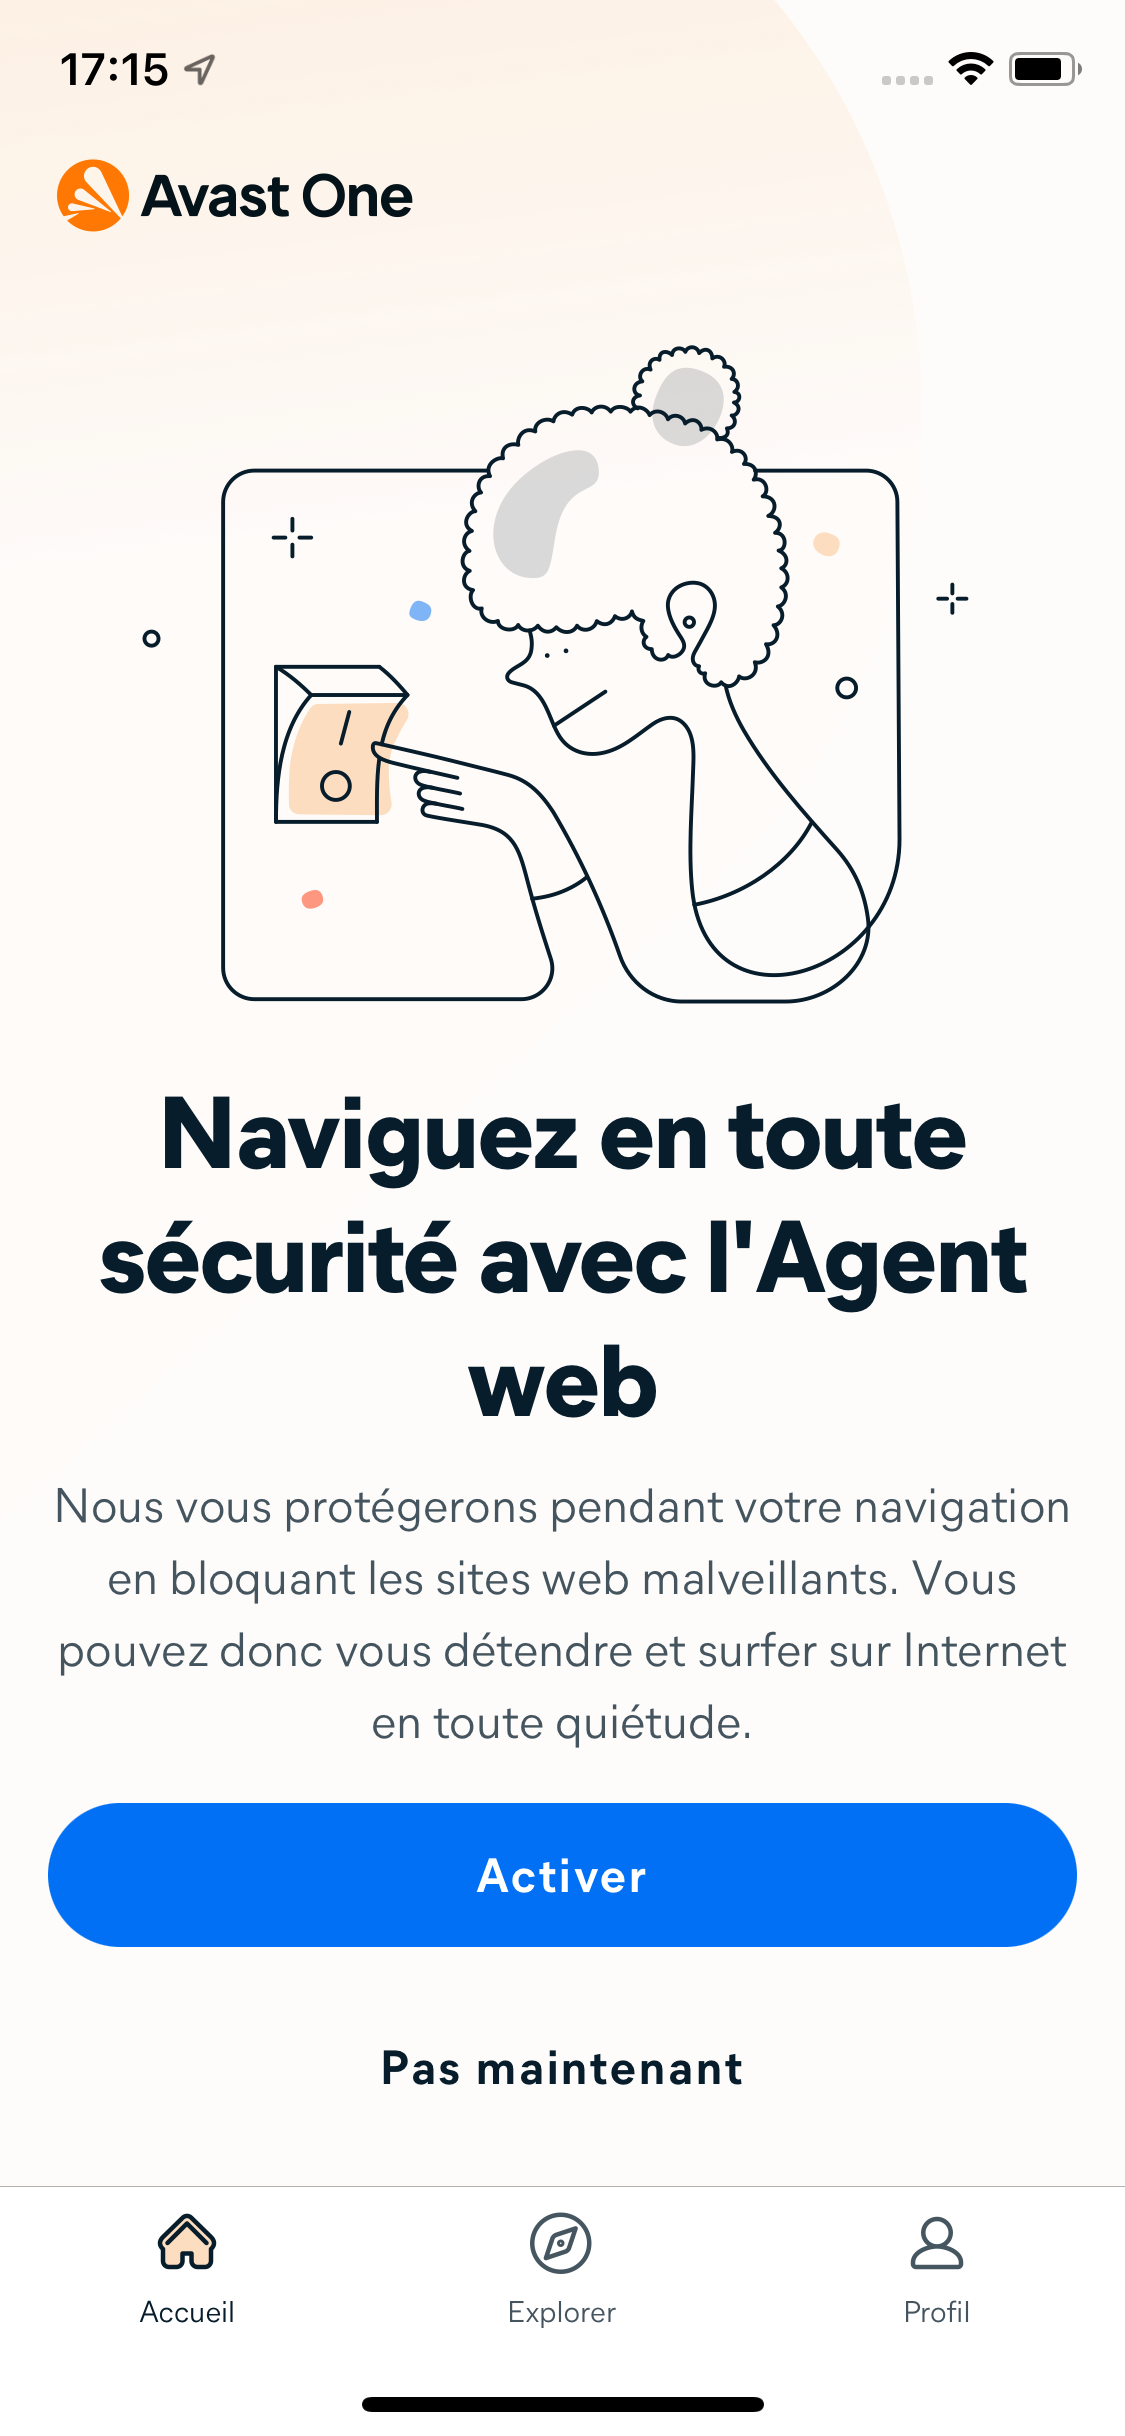 Avast One - Agent Web